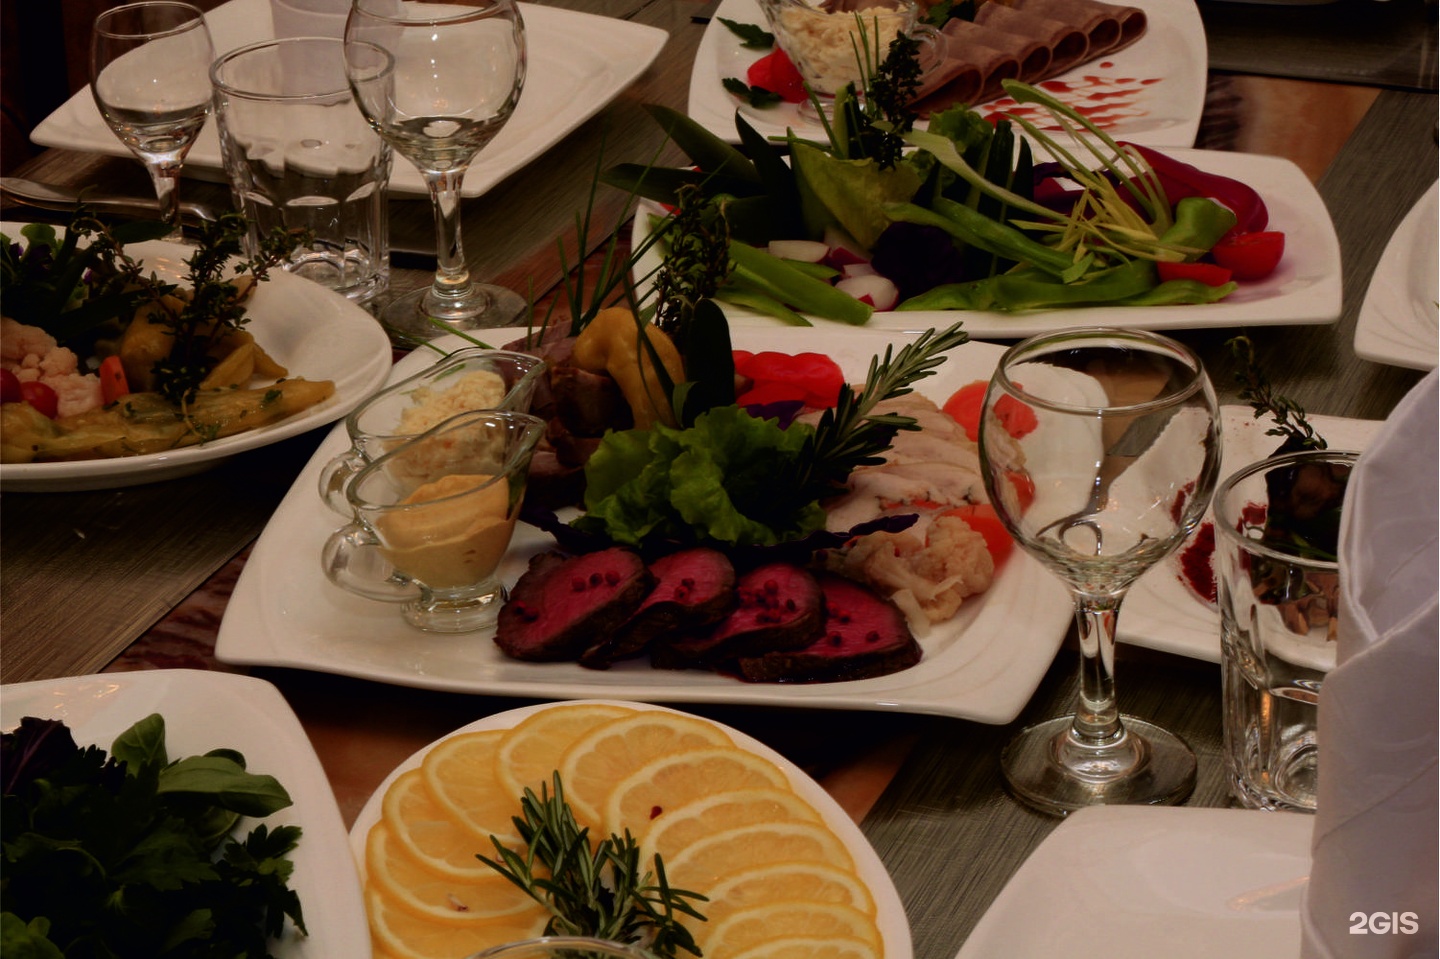 Ресторан янтарь в красноярске фото